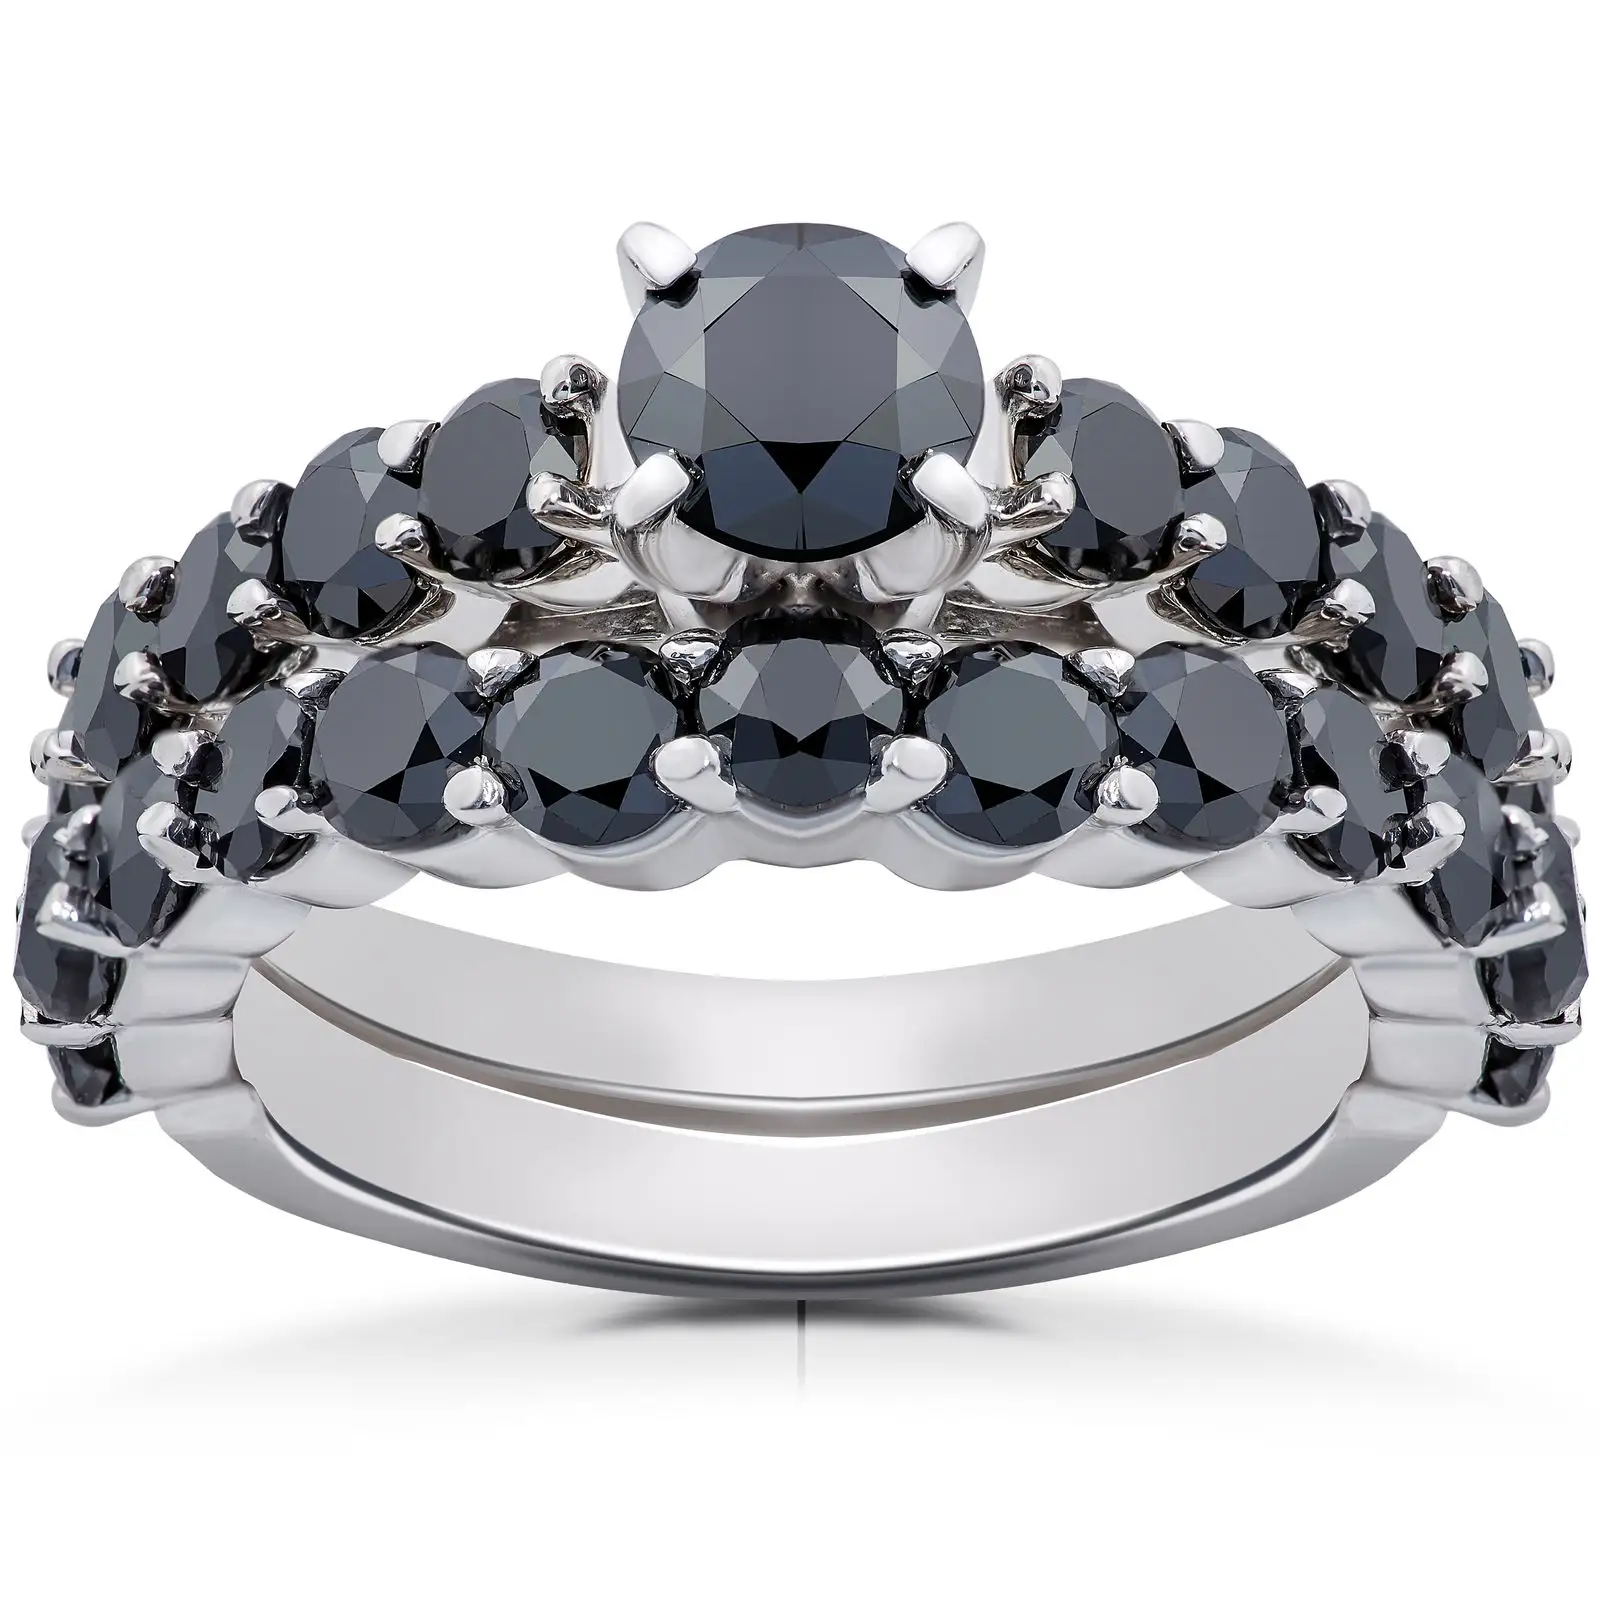 3.05 Carats Natural Black Diamond Engagement Wedding Ring in 14k White Gold Bridal Sets white gold diamond ring